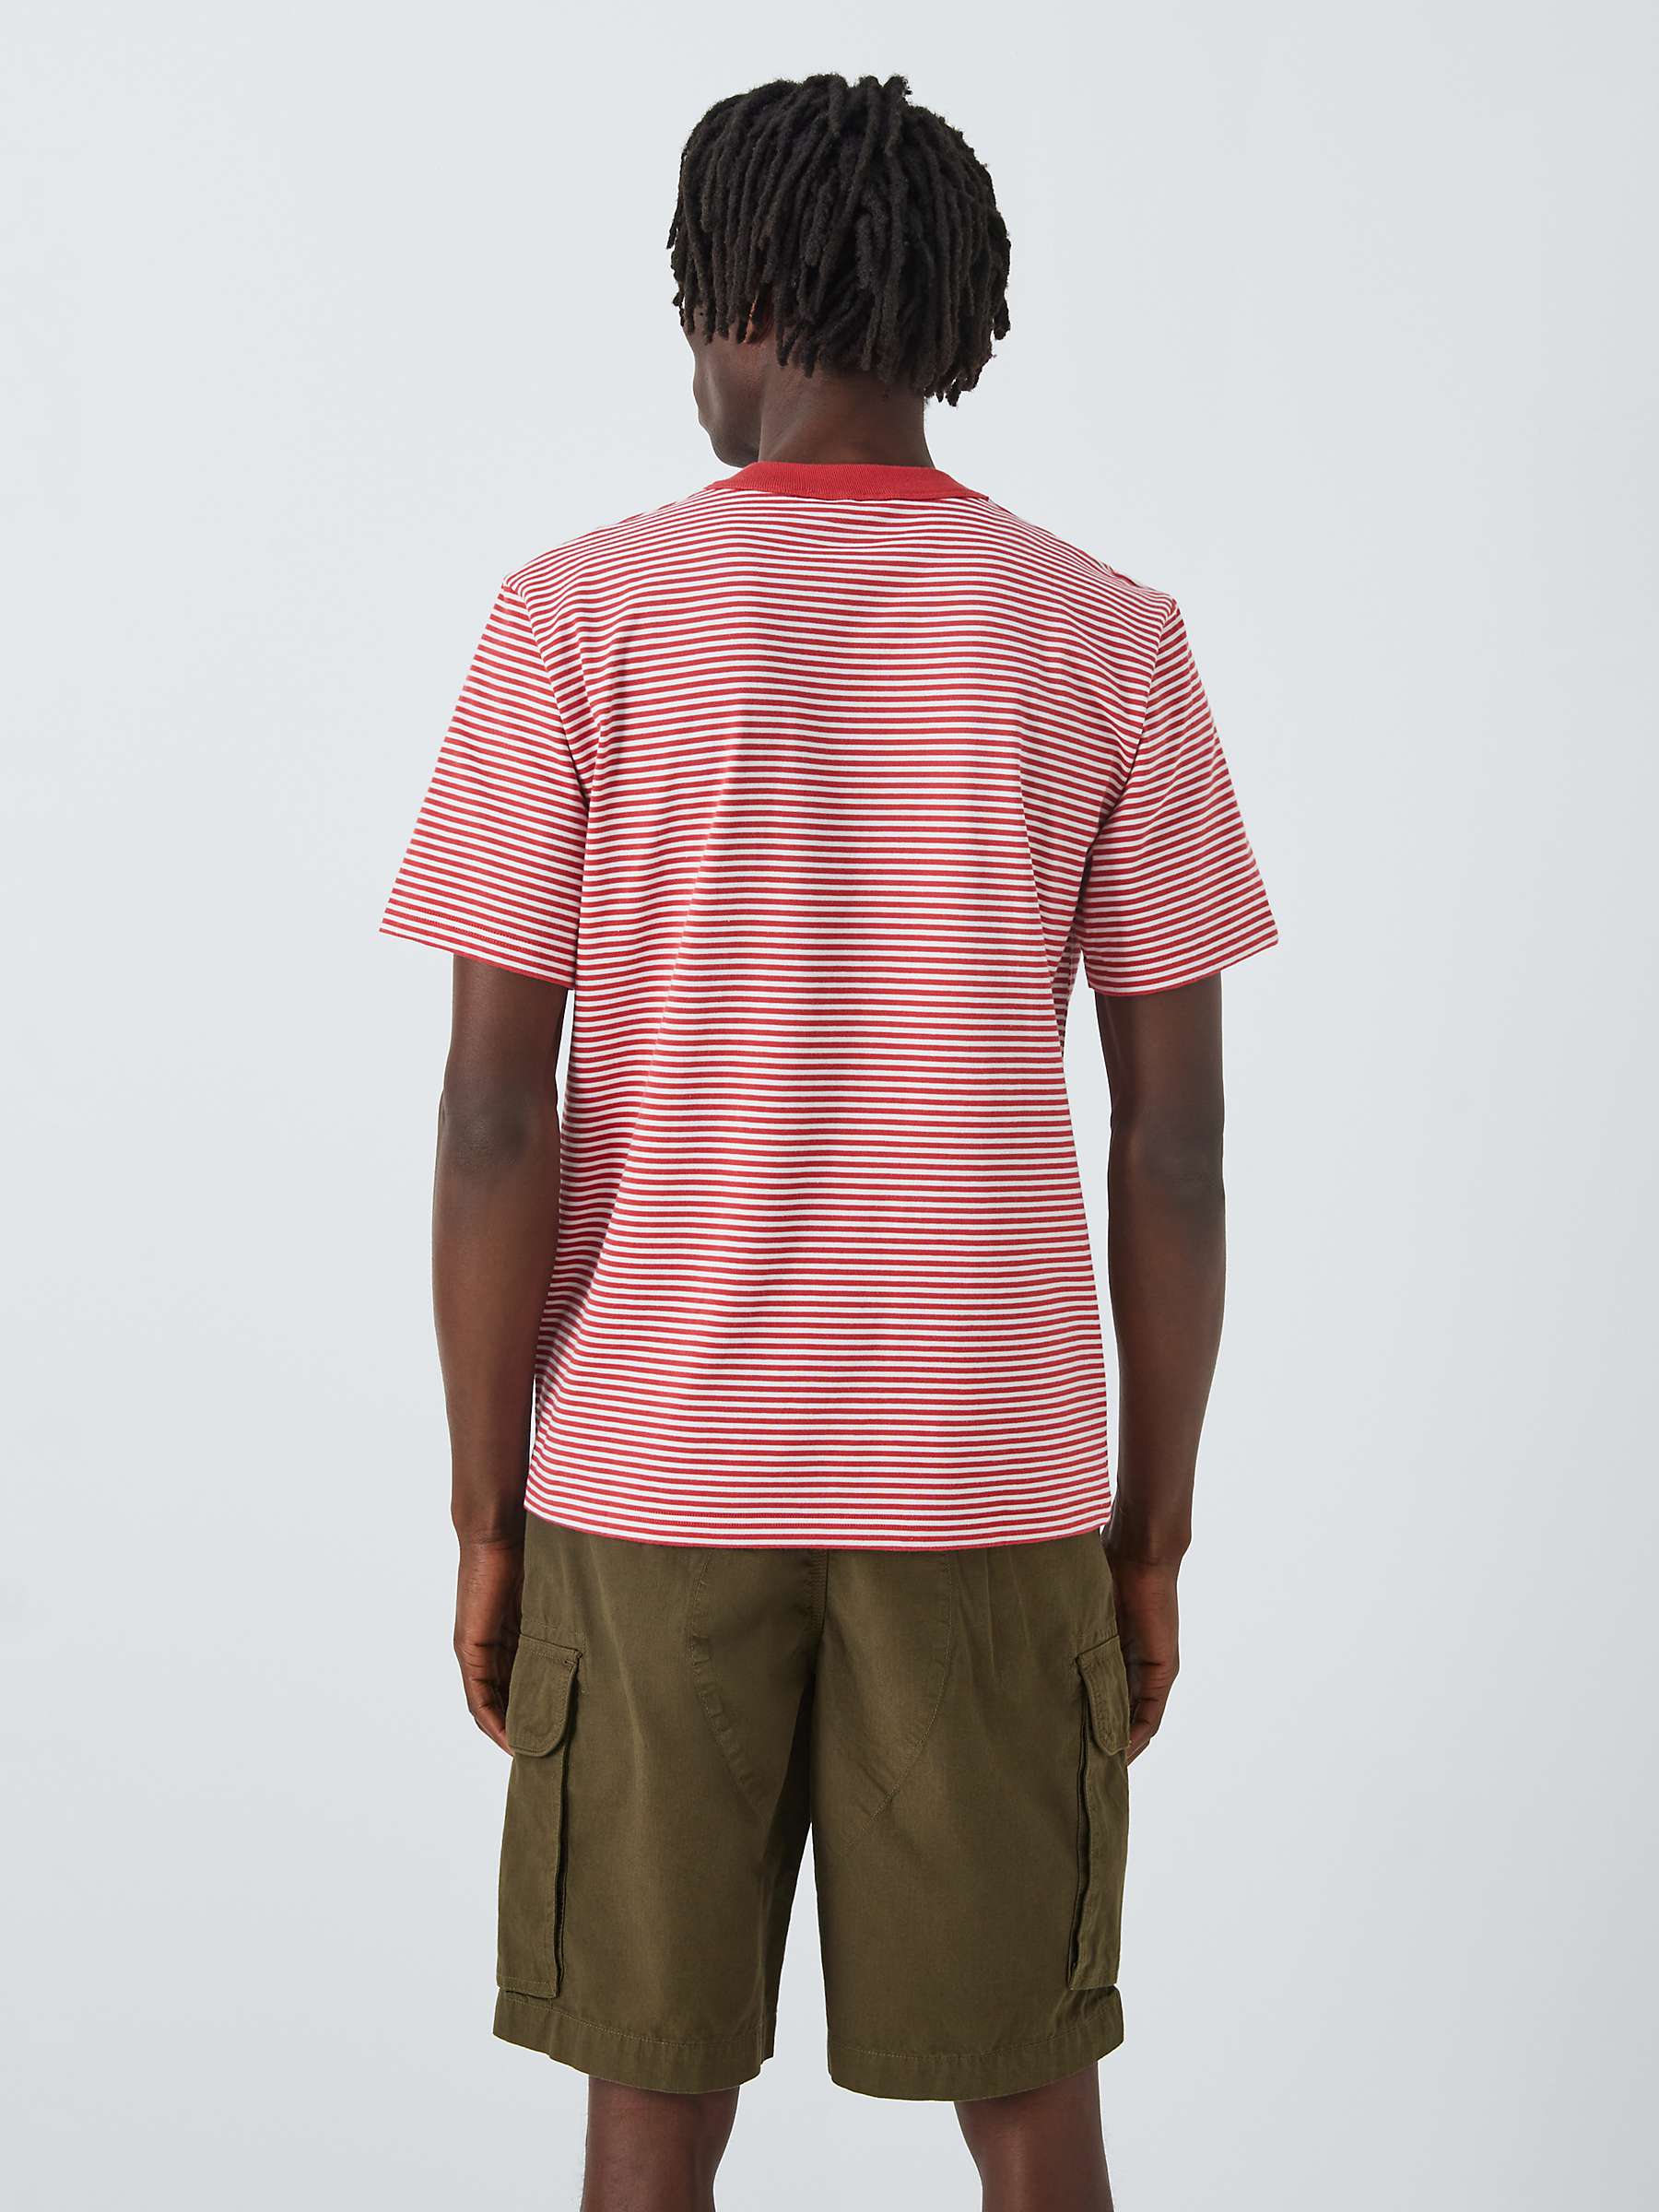 Buy Armor Lux Striped Crew Neck Breton Short Sleeve T-Shirt, Red/Multi Online at johnlewis.com